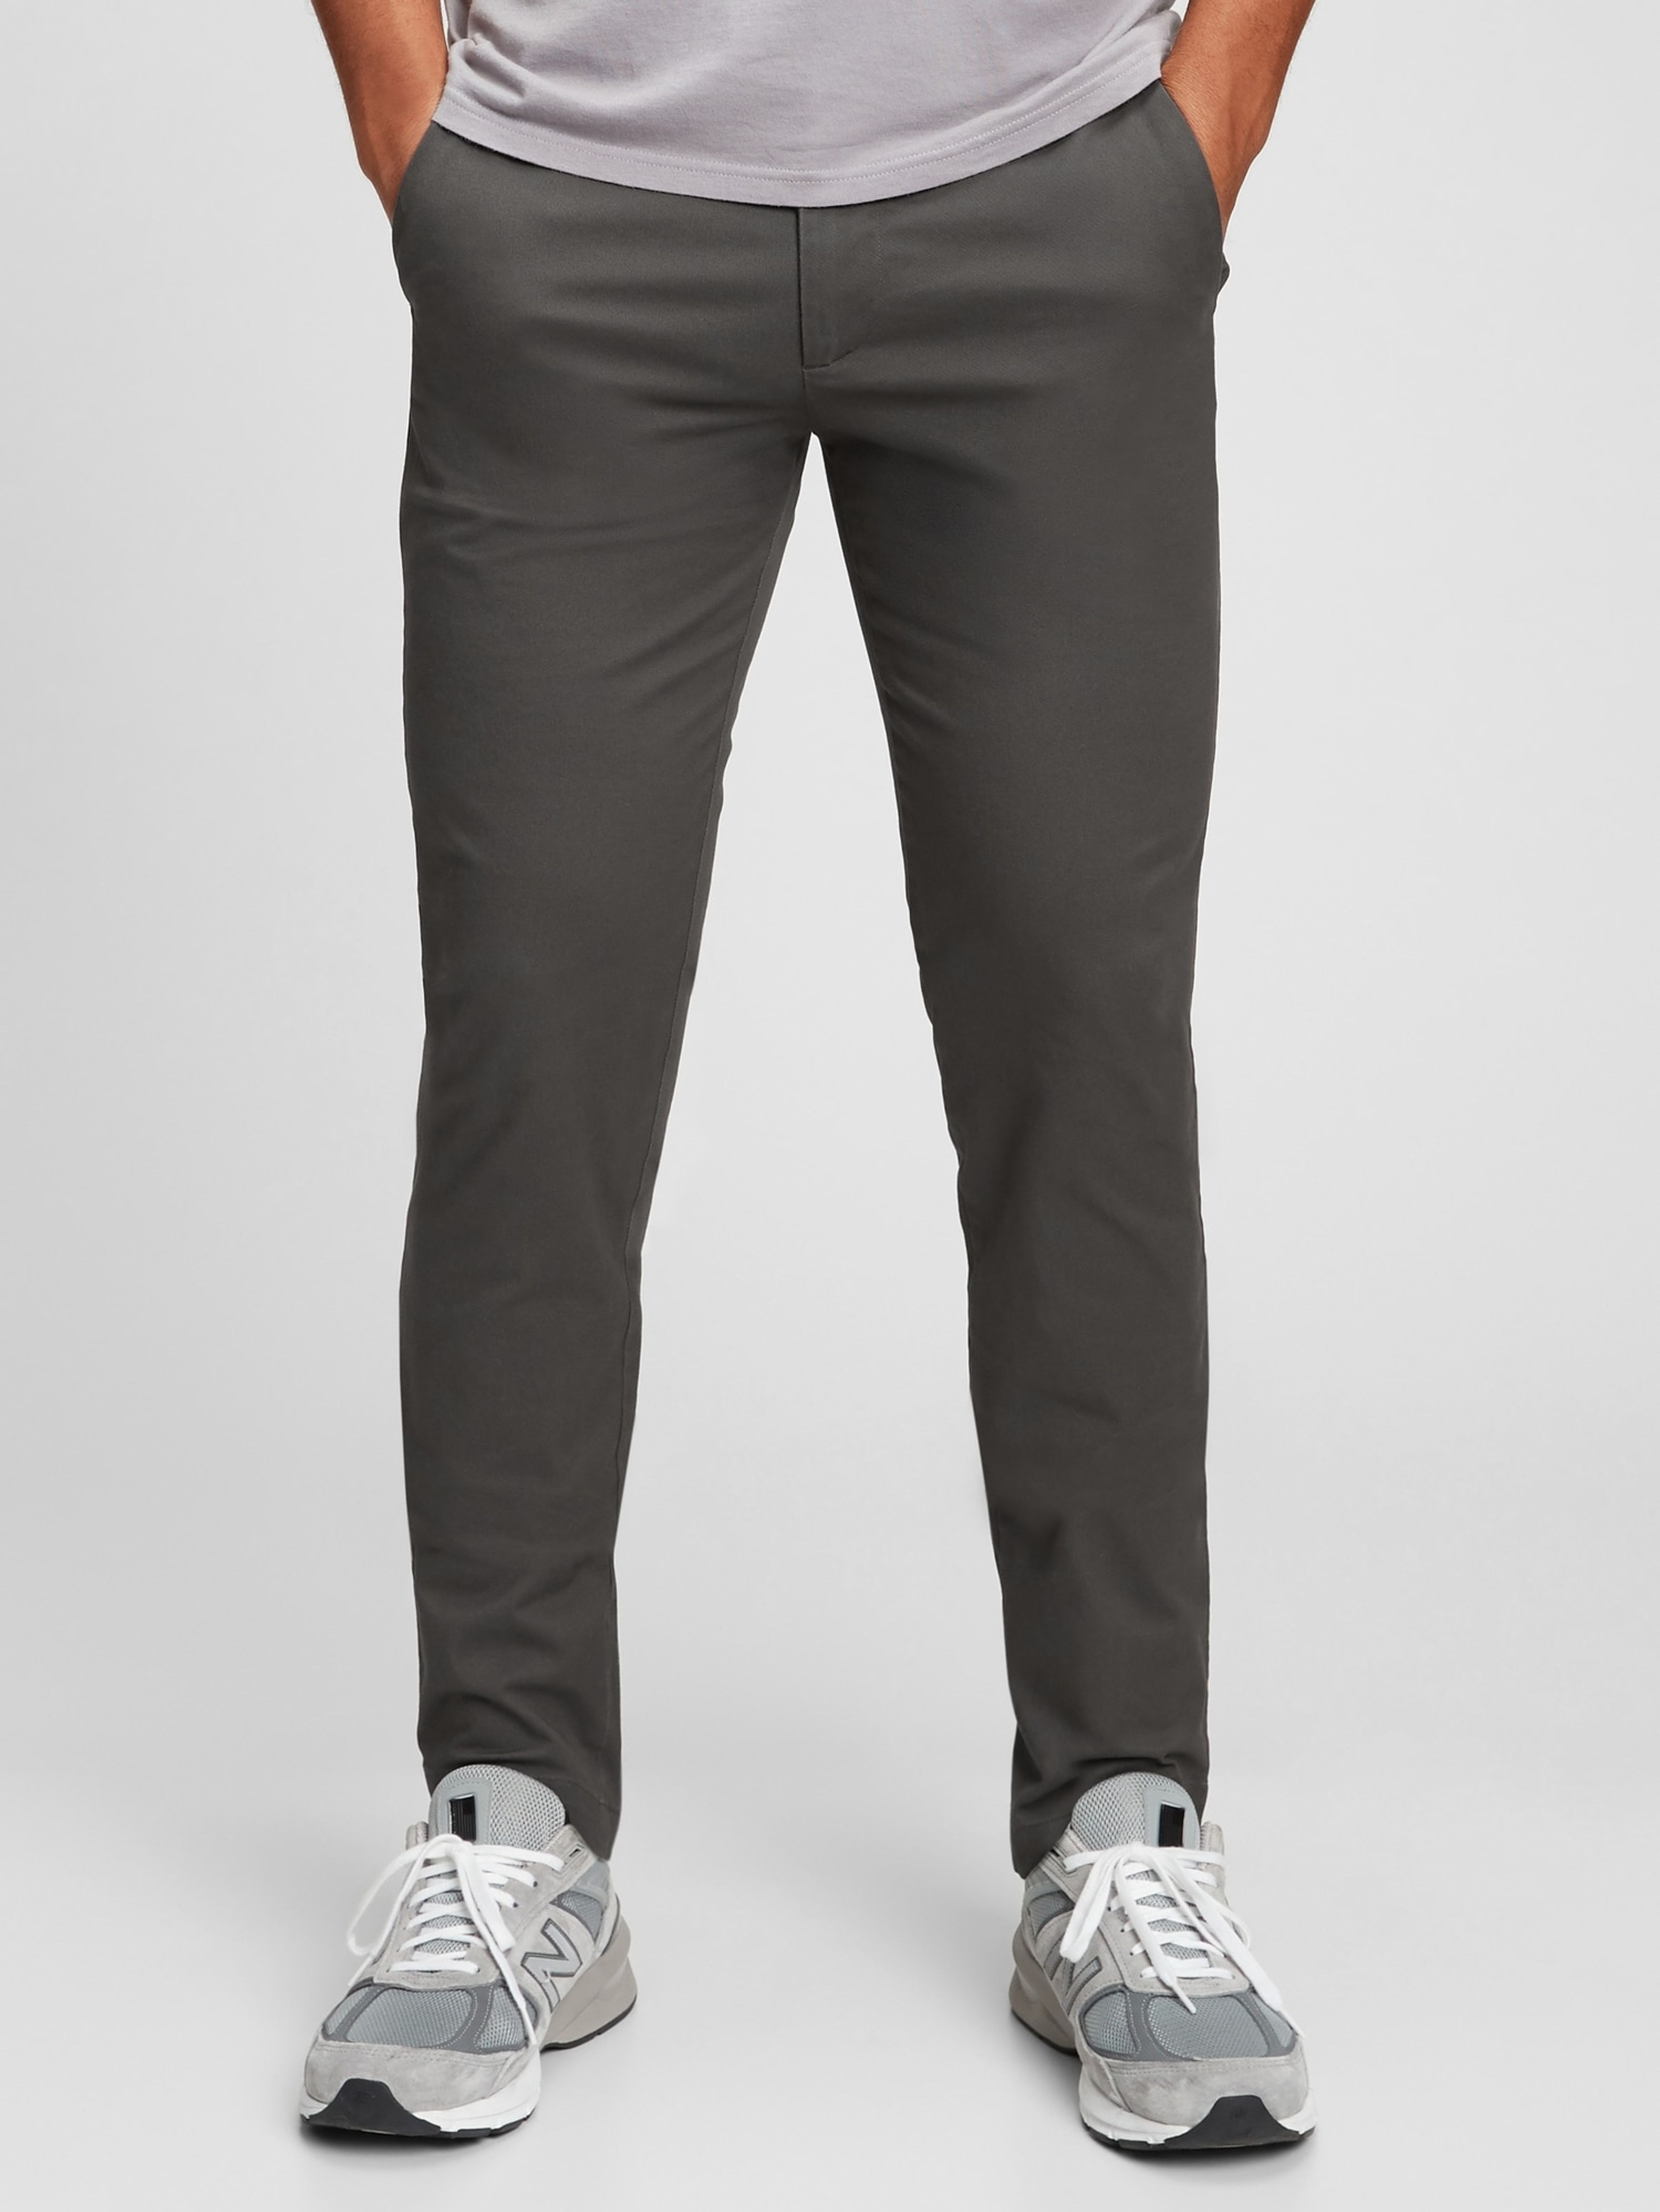 Spodnie modern khaki skinny